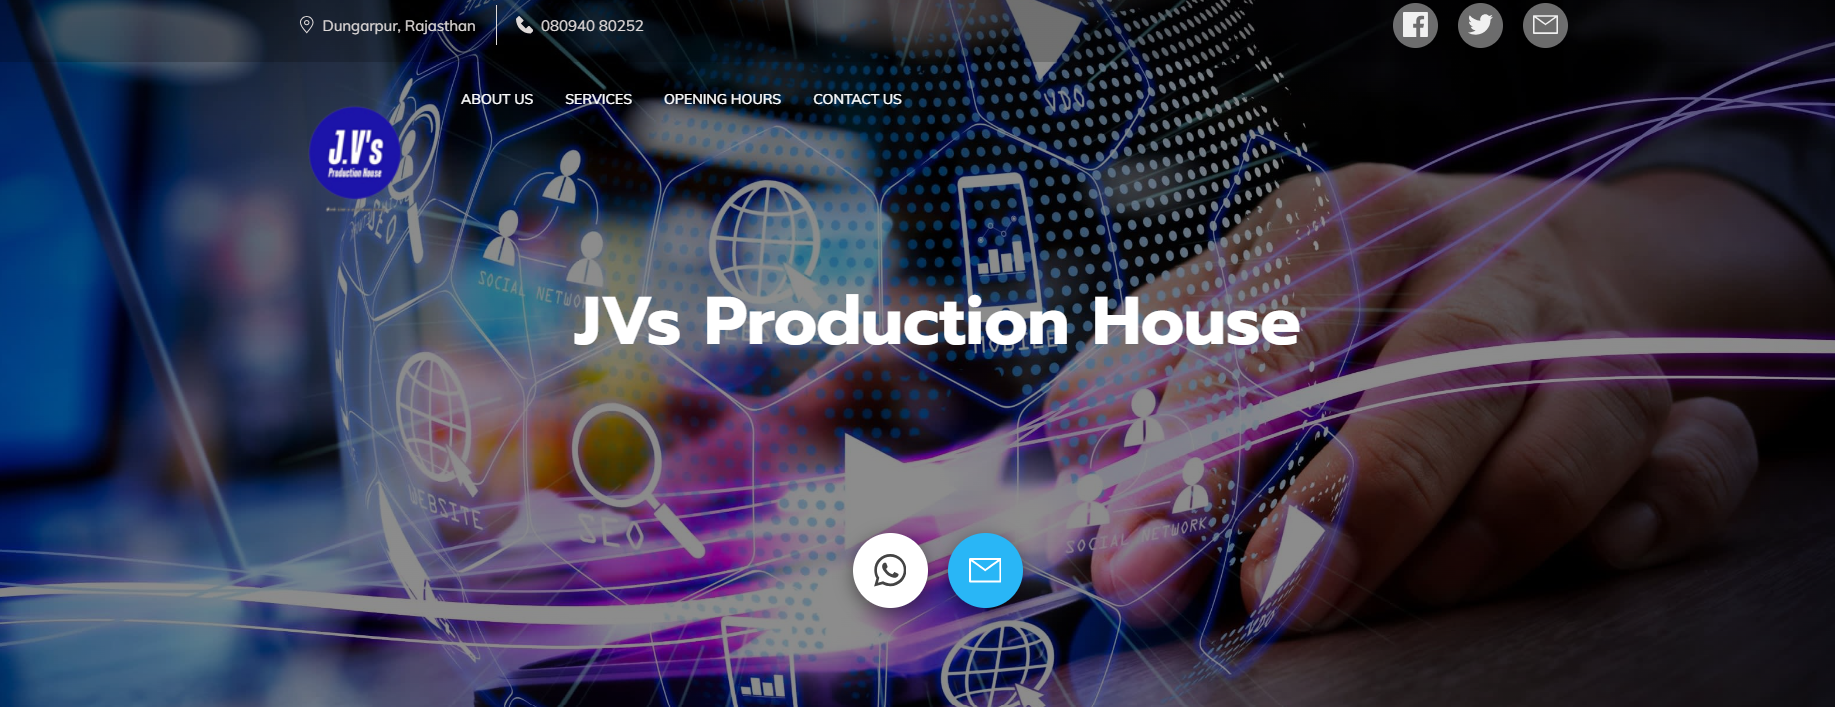 JVs Production House